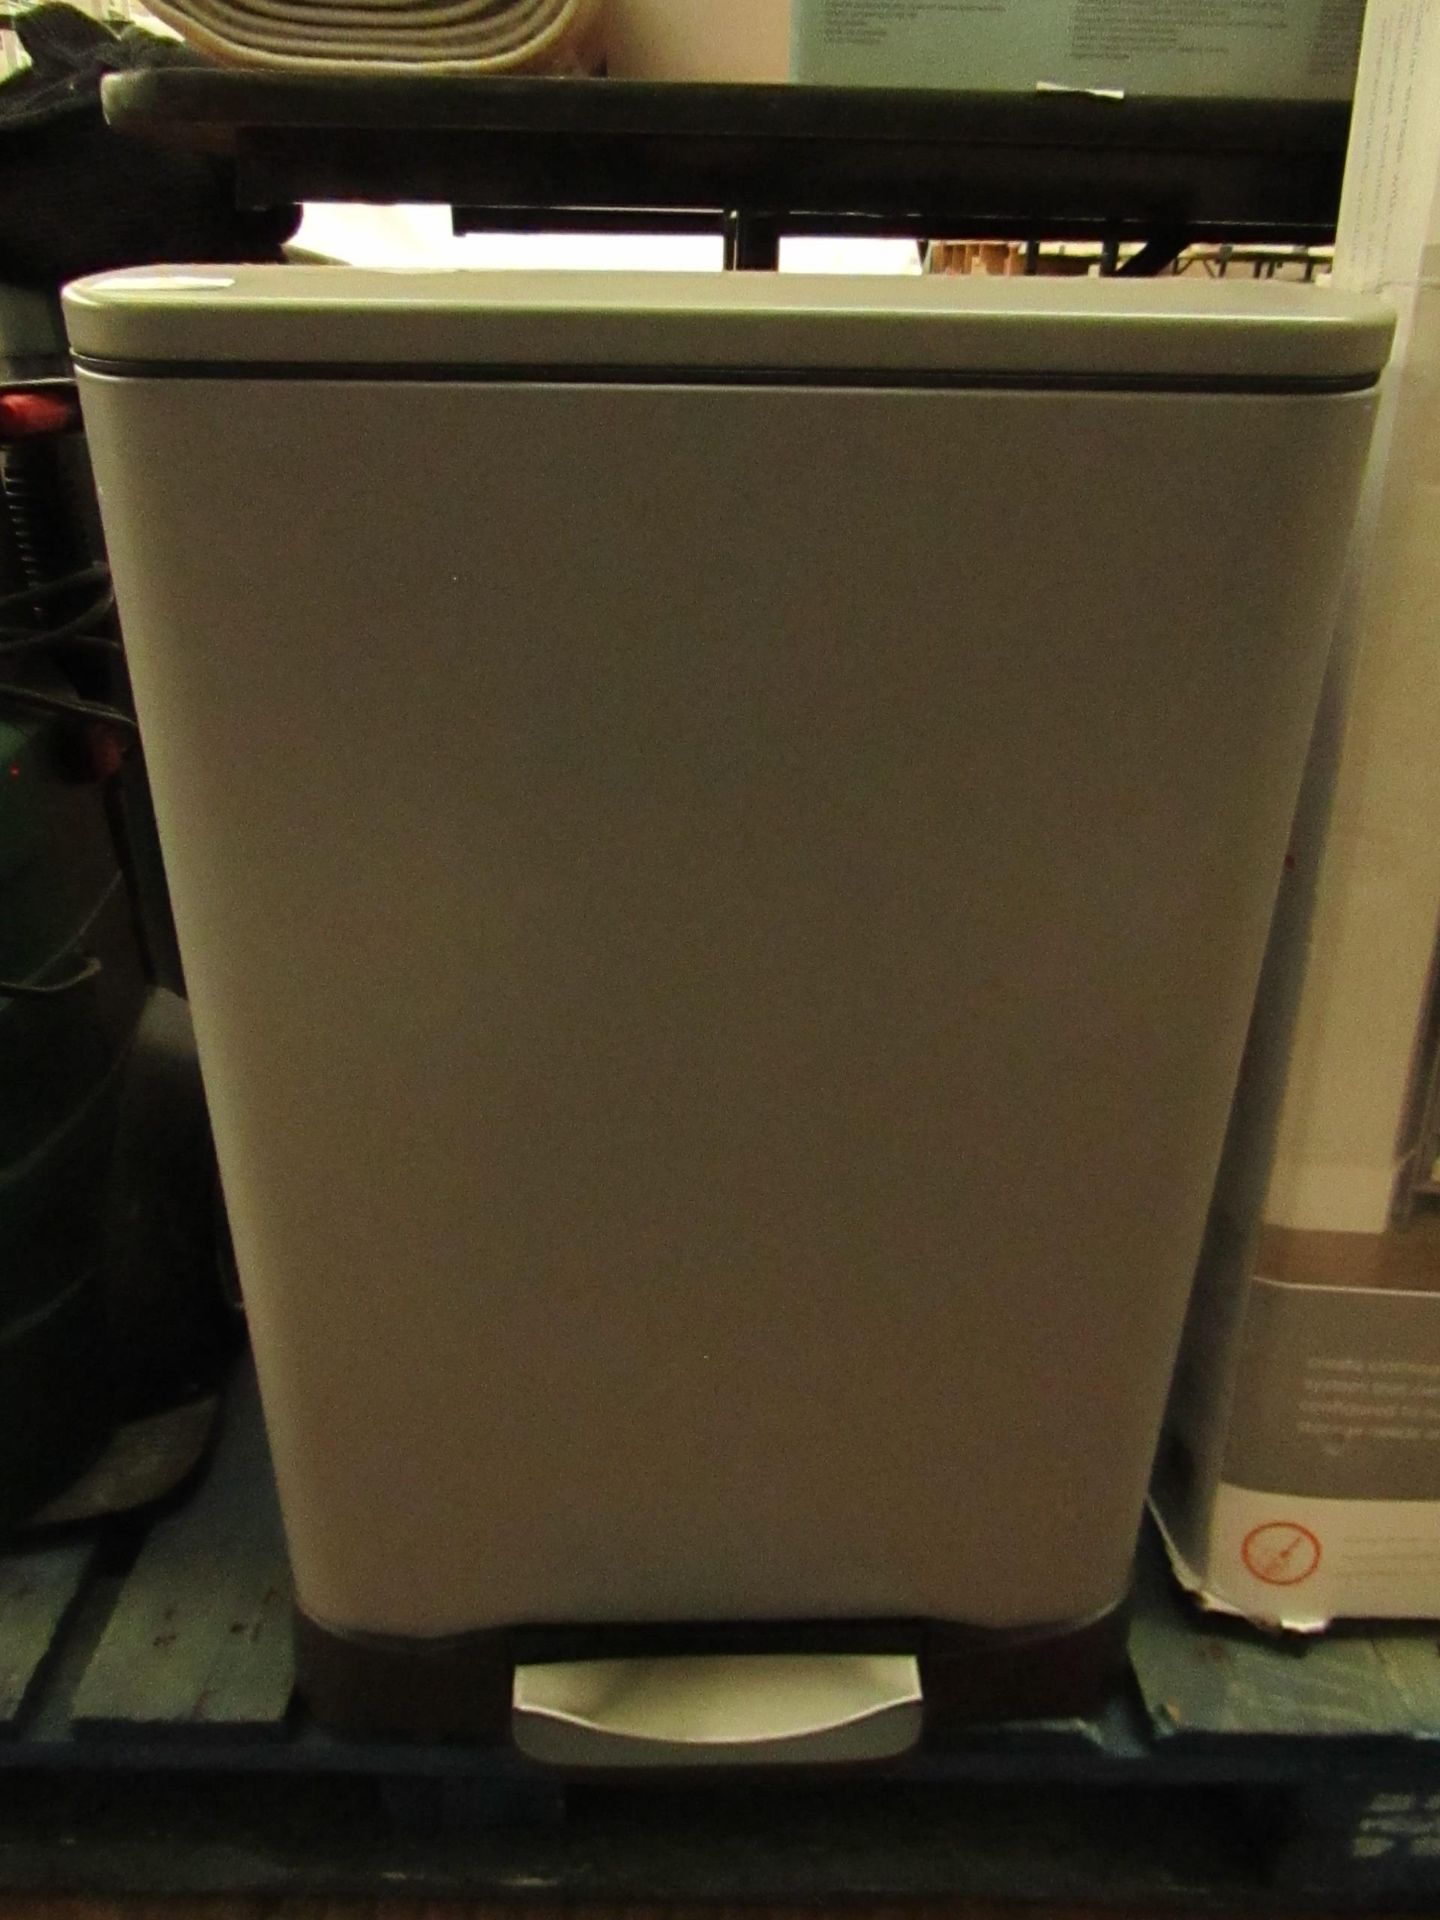 EKO - Neo-Cube Recycling Bin - Grey - Some Marks Present. RRP £69.99